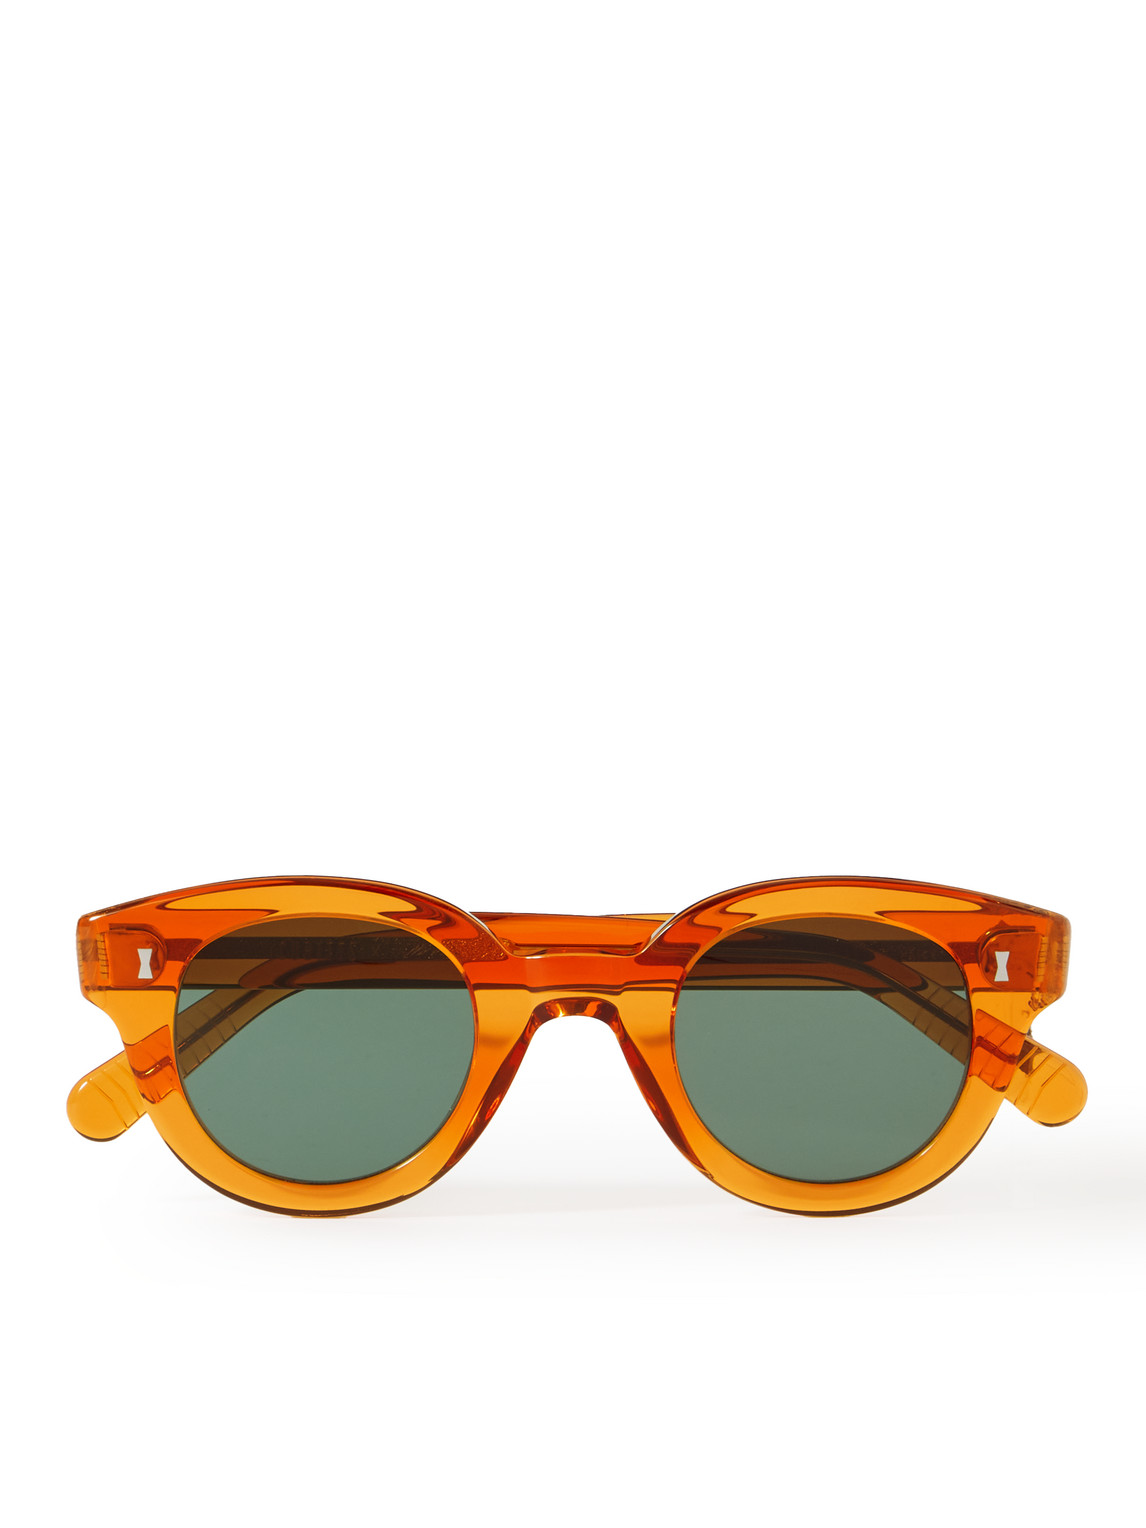 Cubitts Montague Round-Frame Acetate Sunglasses